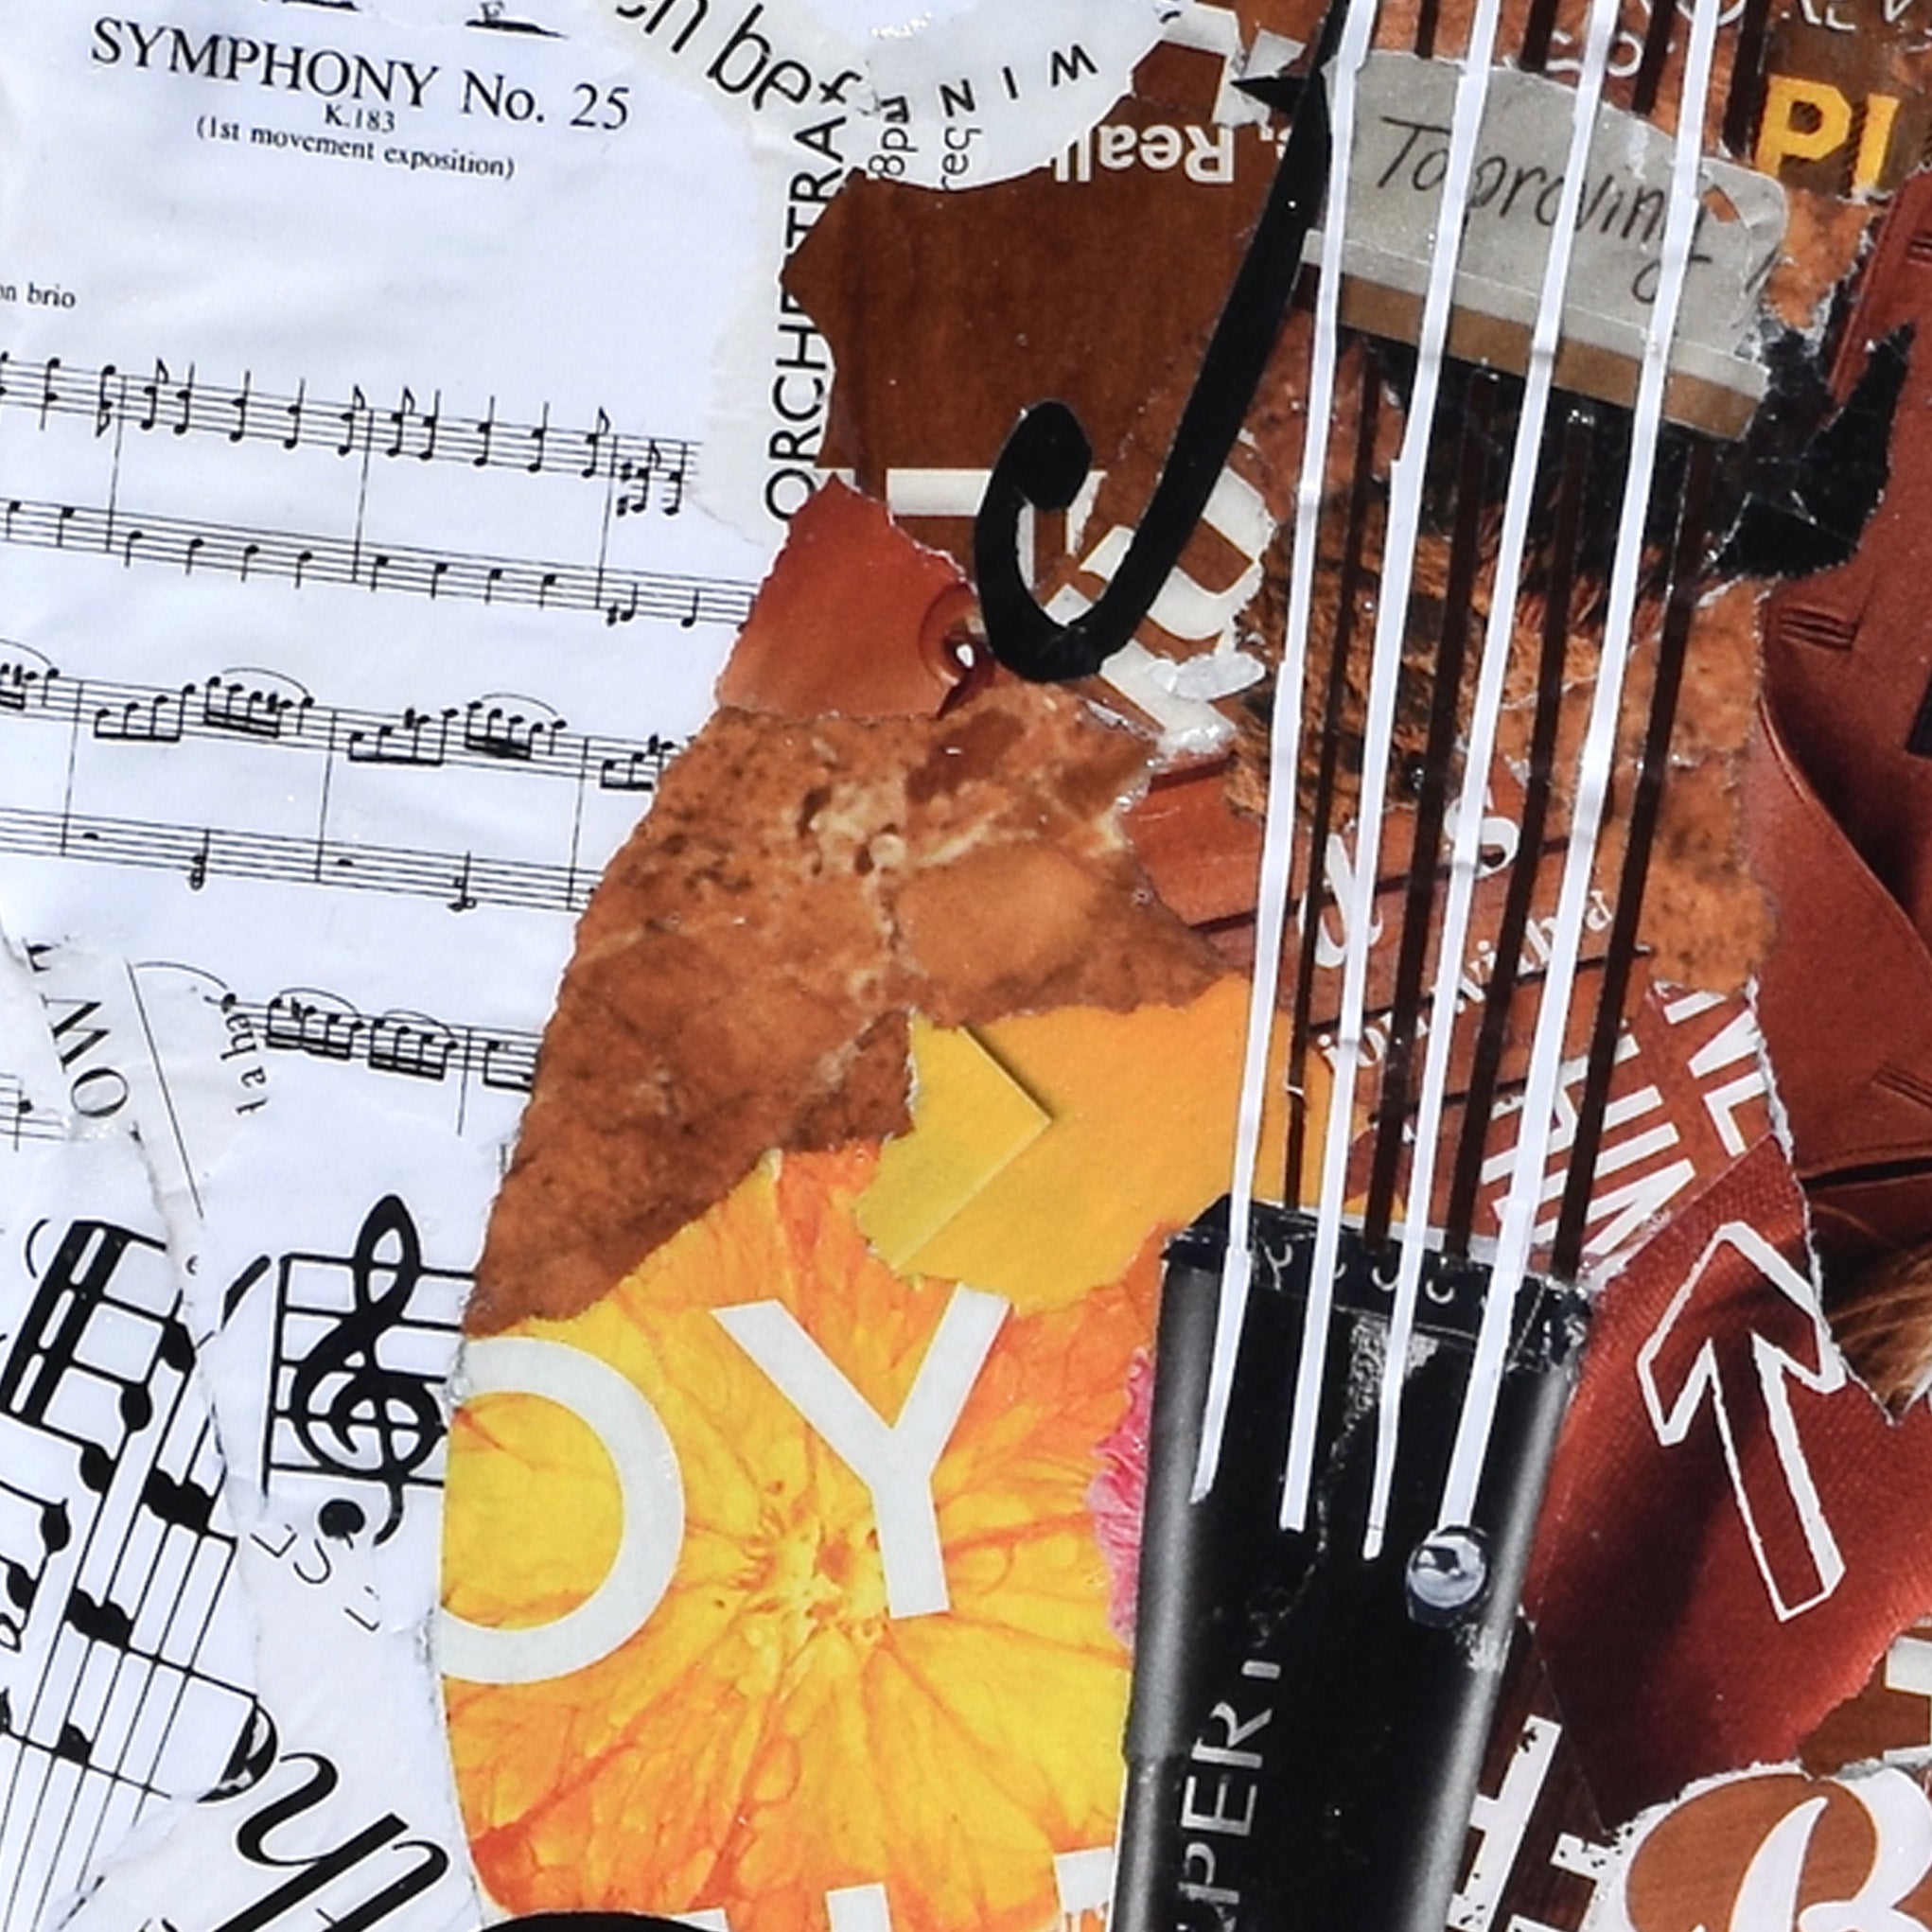 Violin Collage Art made from torn magazines – Deborah Shapiro Art